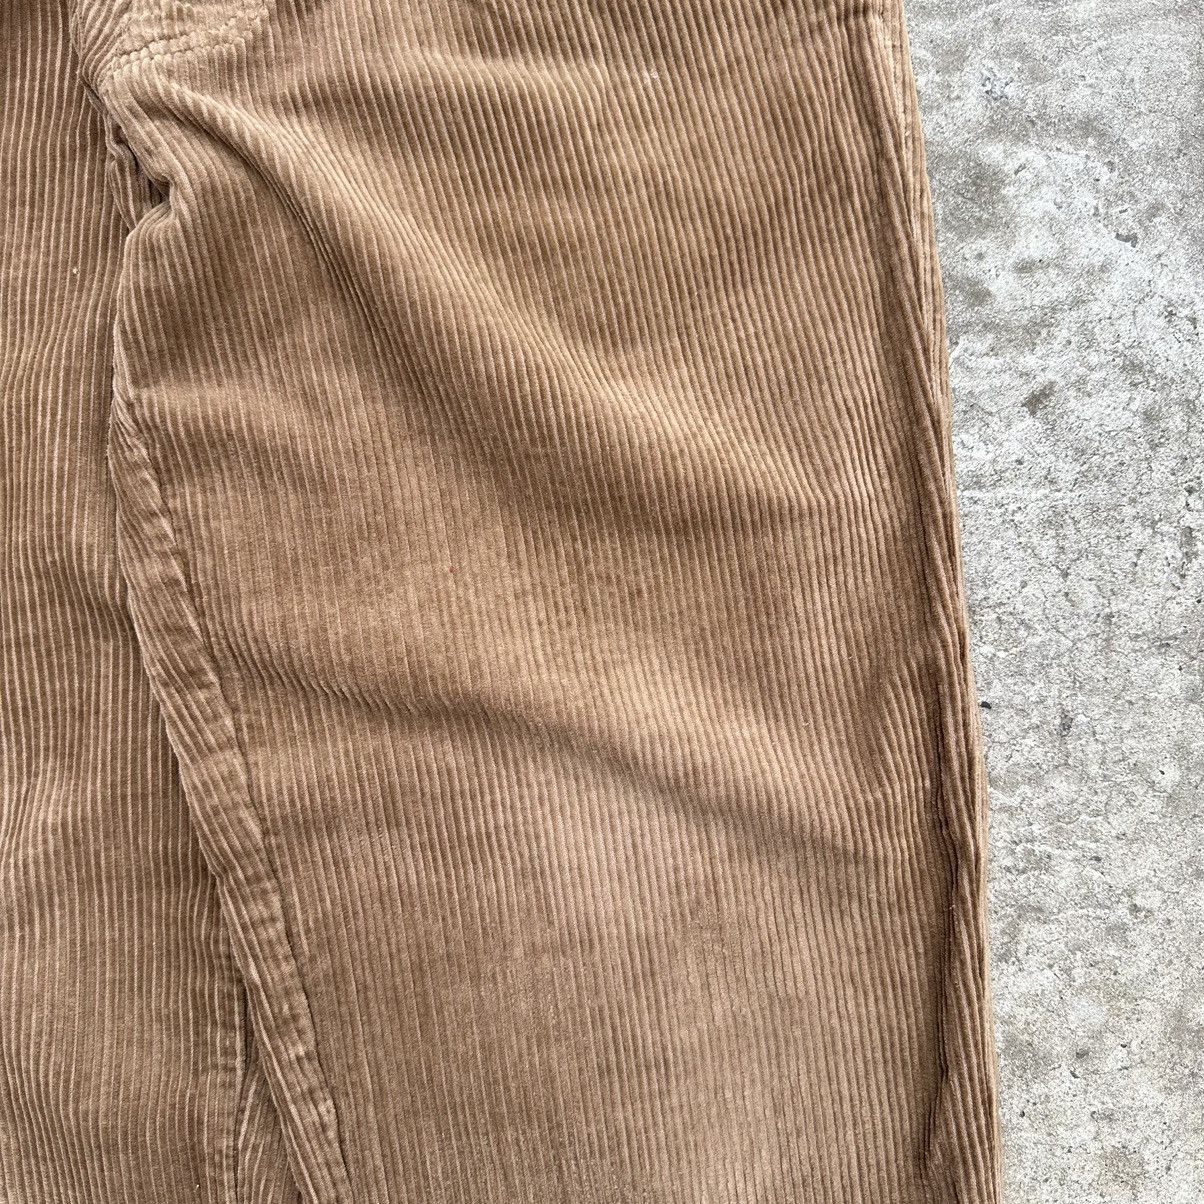 Vintage Vintage Corduroy Pants Marlboro Classic velveteen 90s Size US 32 / EU 48 - 9 Thumbnail